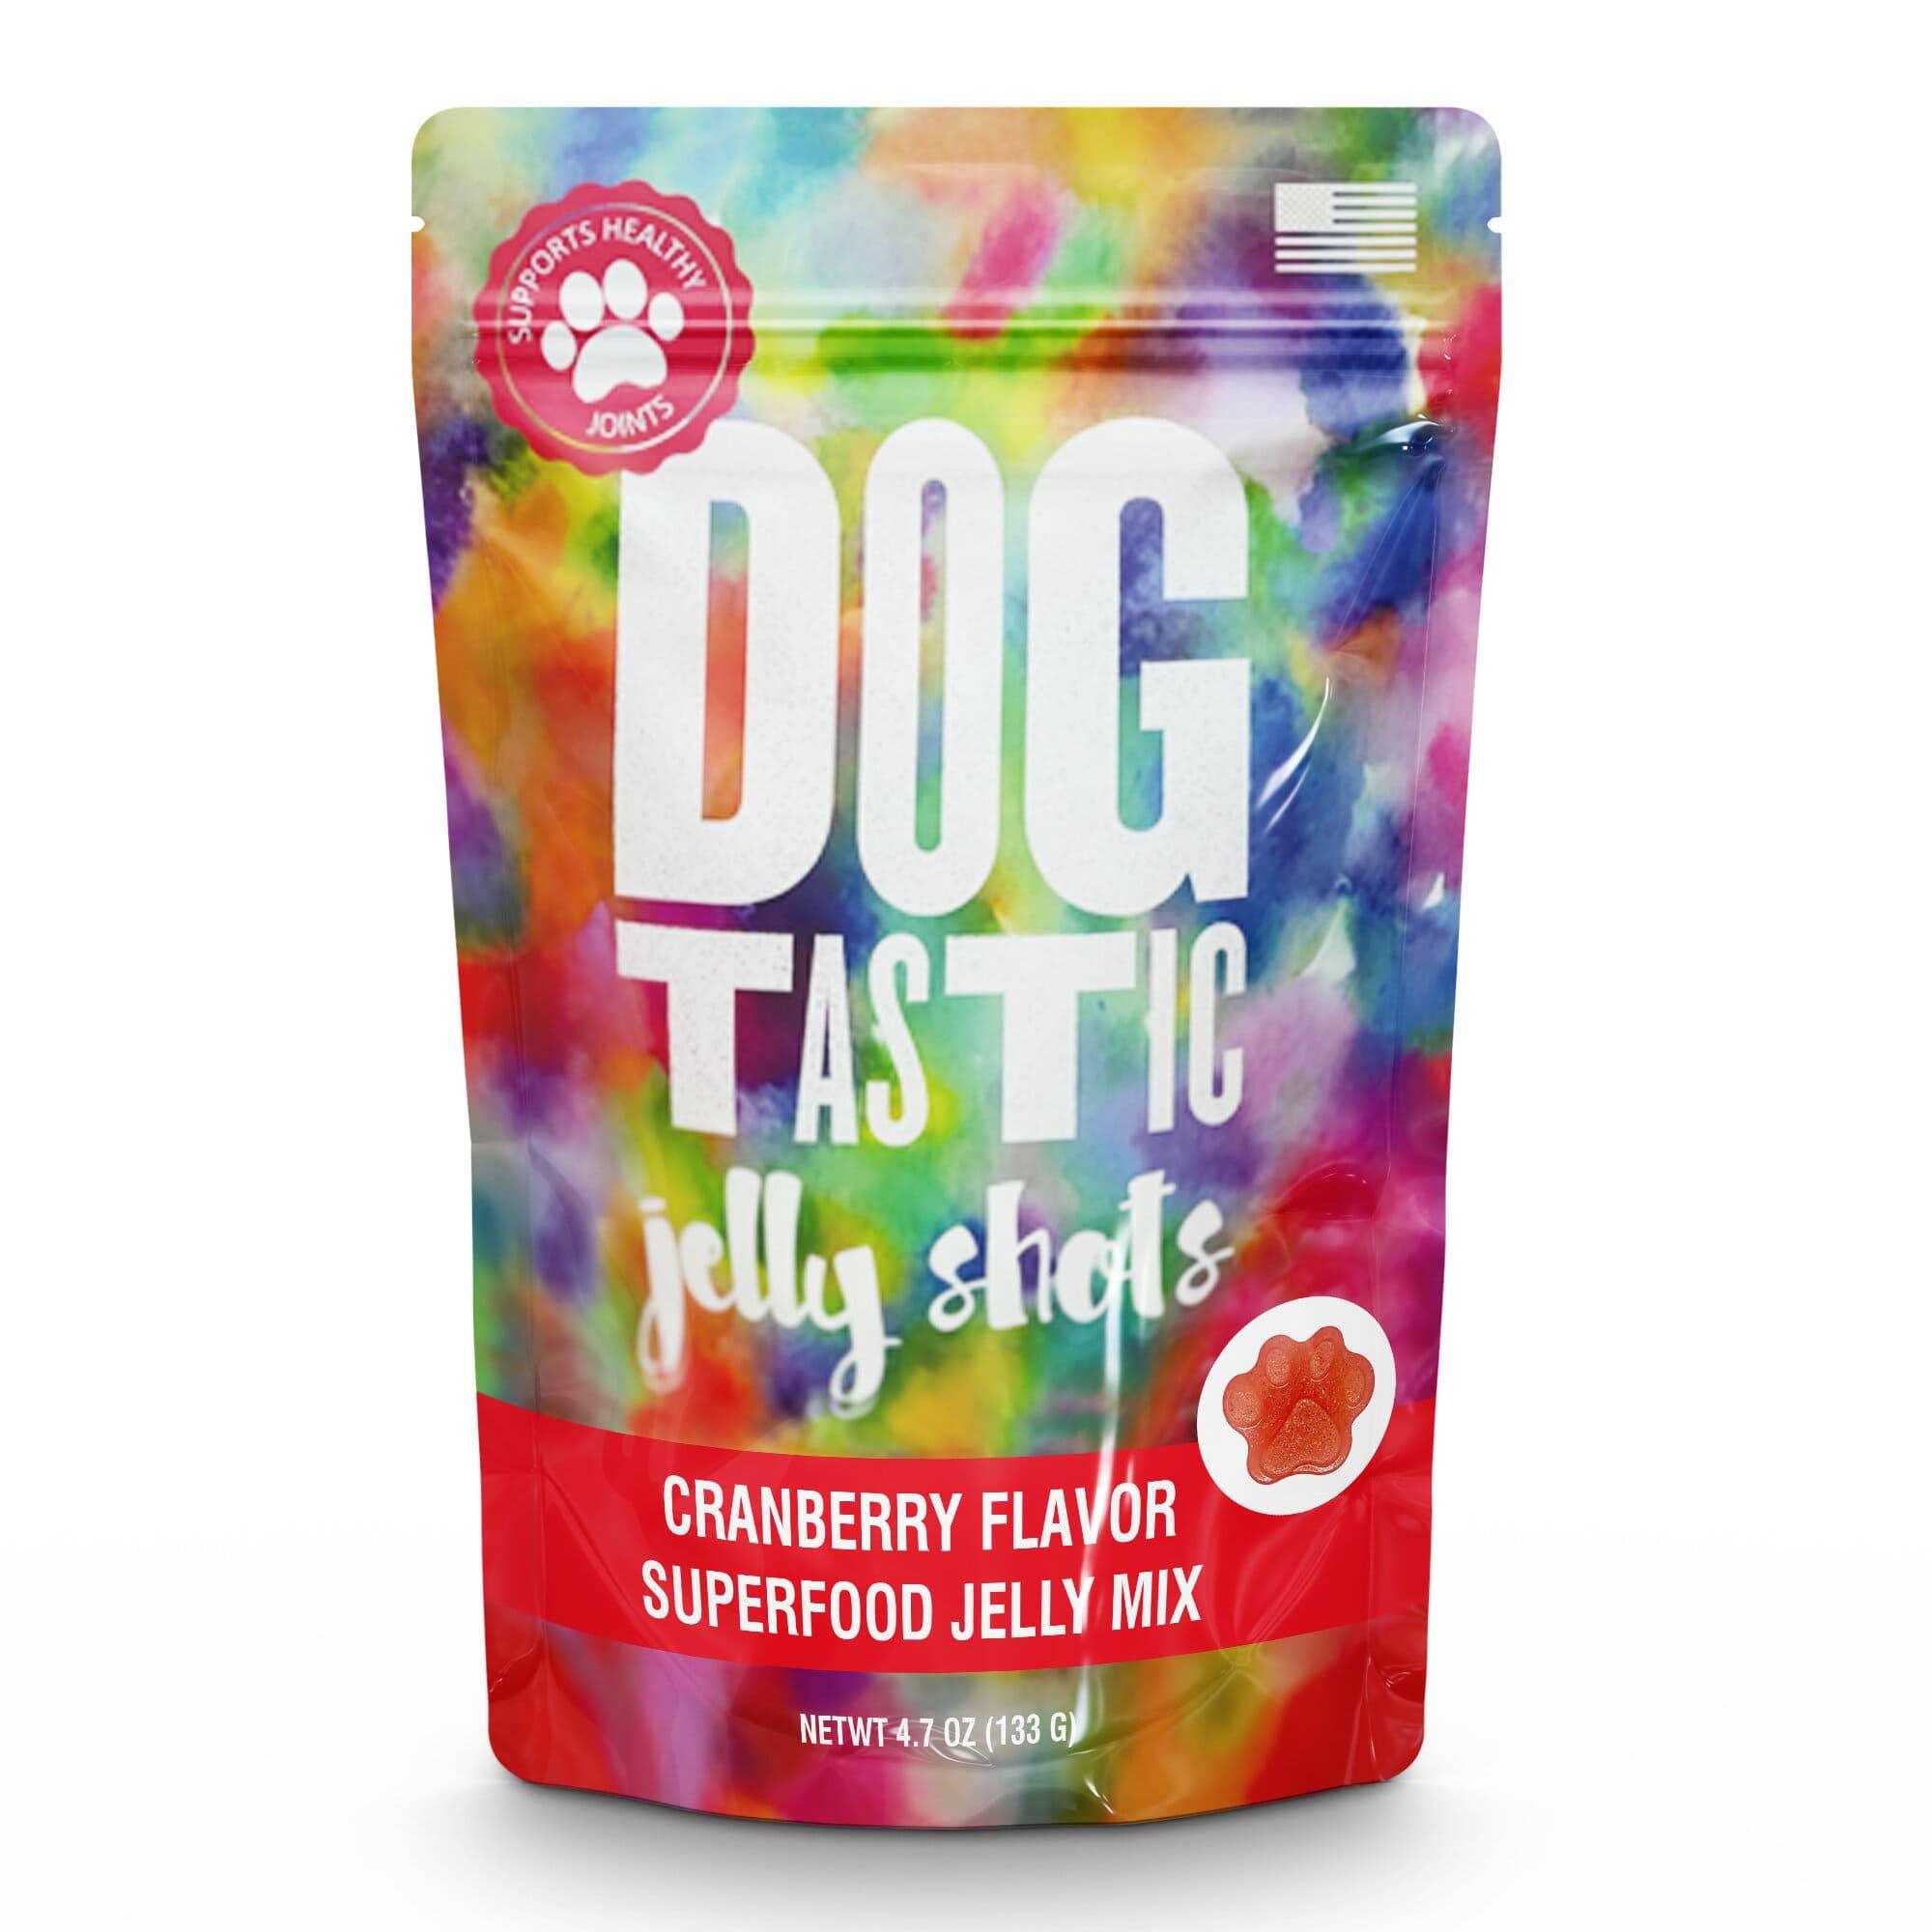 Dogtastic Jelly Shots - Cranberry Flavor - Rocky & Maggie's Pet Boutique and Salon